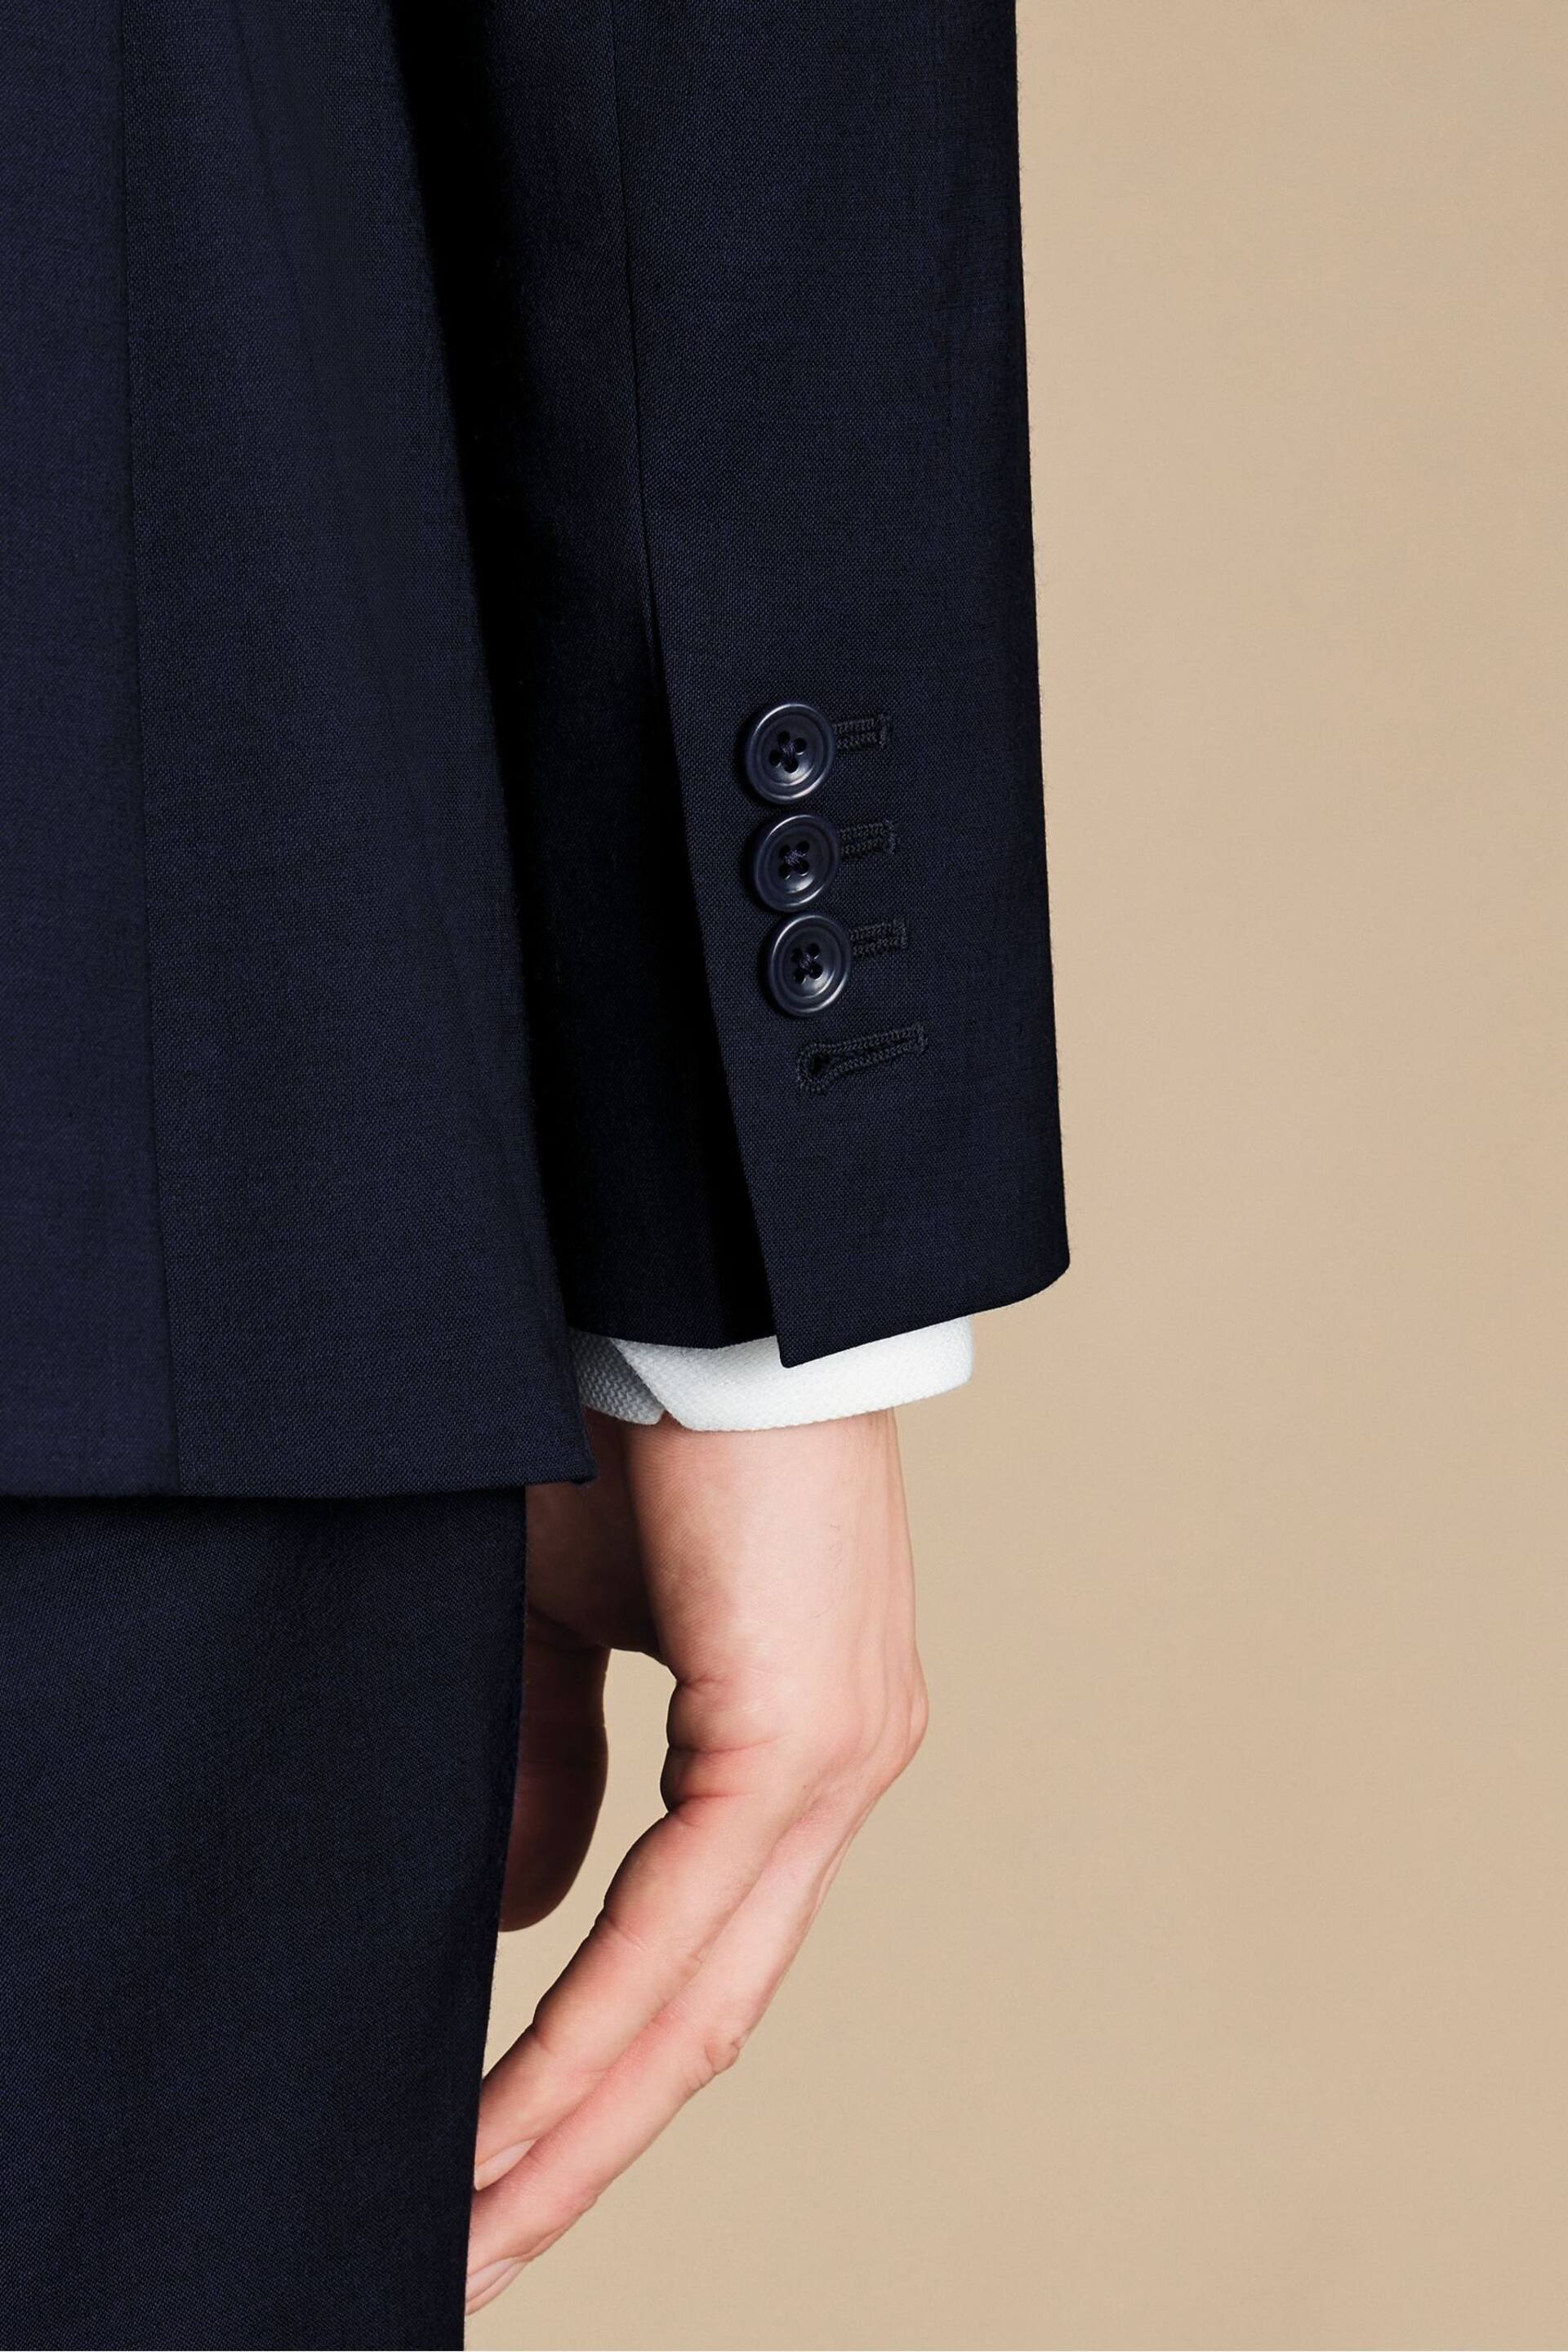 Charles Tyrwhitt Blue Slim Fit Italian Luxury Jacket - Image 3 of 5